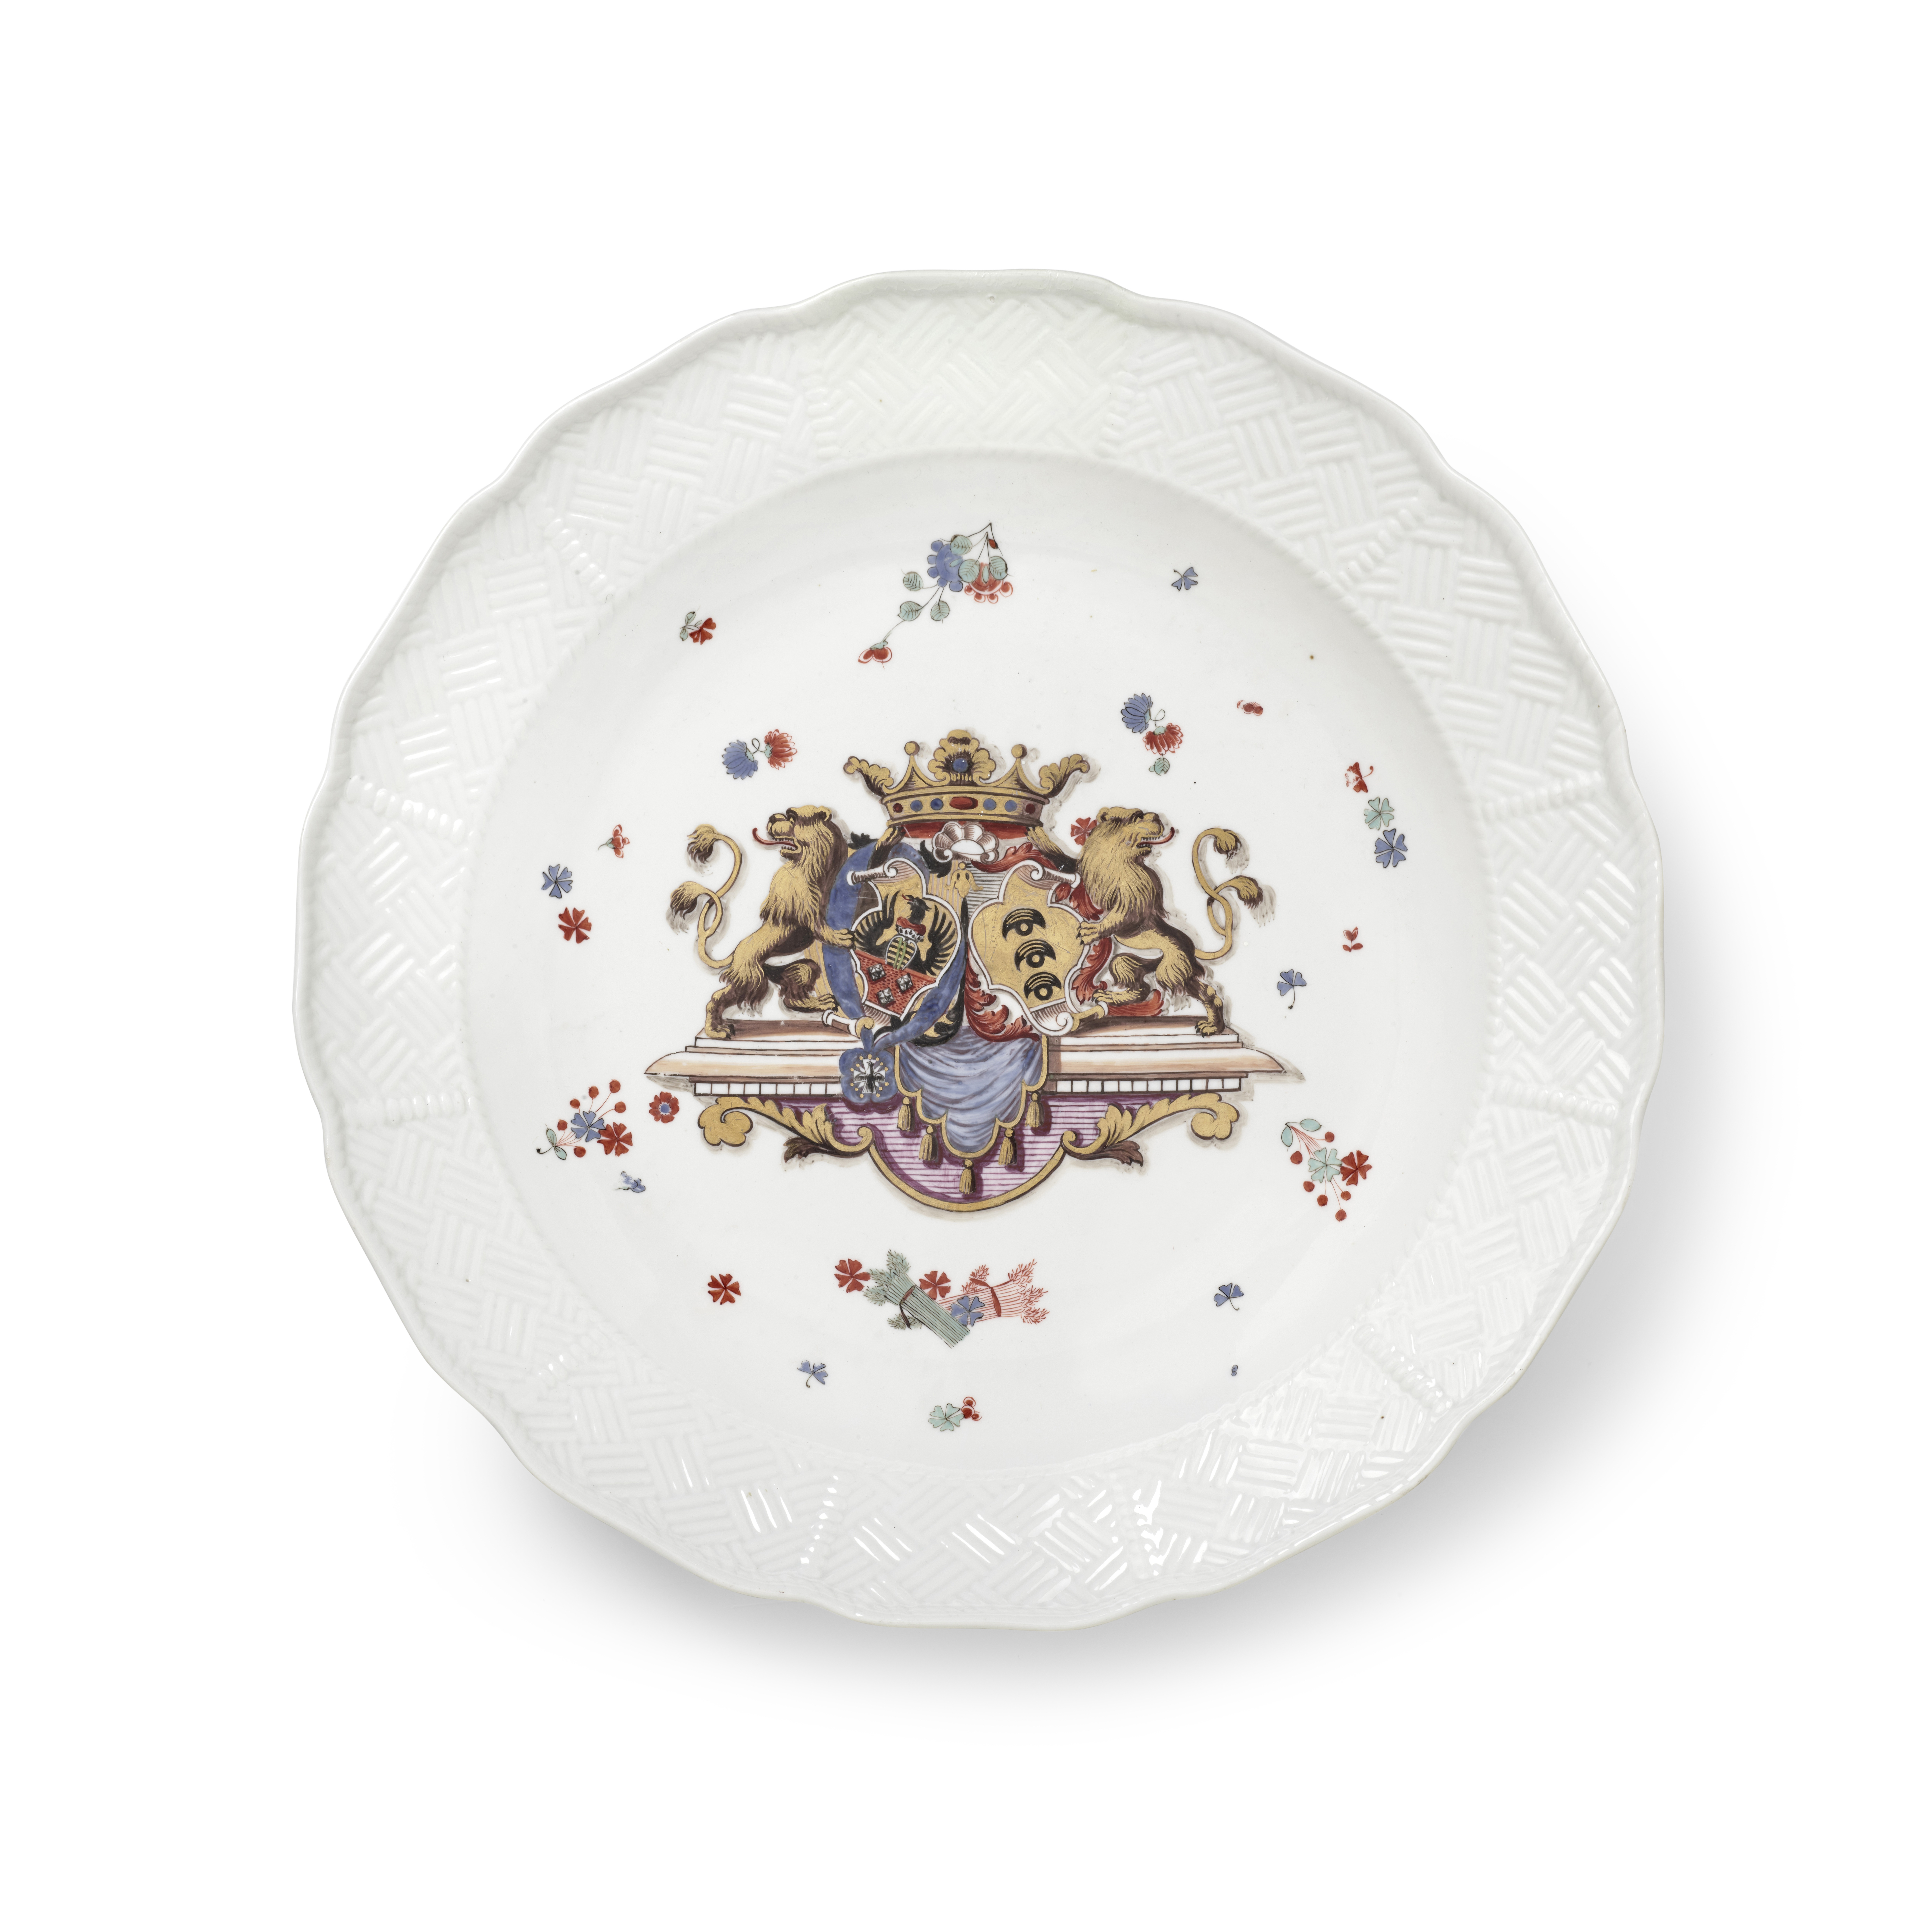 A rare Meissen large dish from the Sulkowski Service, circa 1735-38